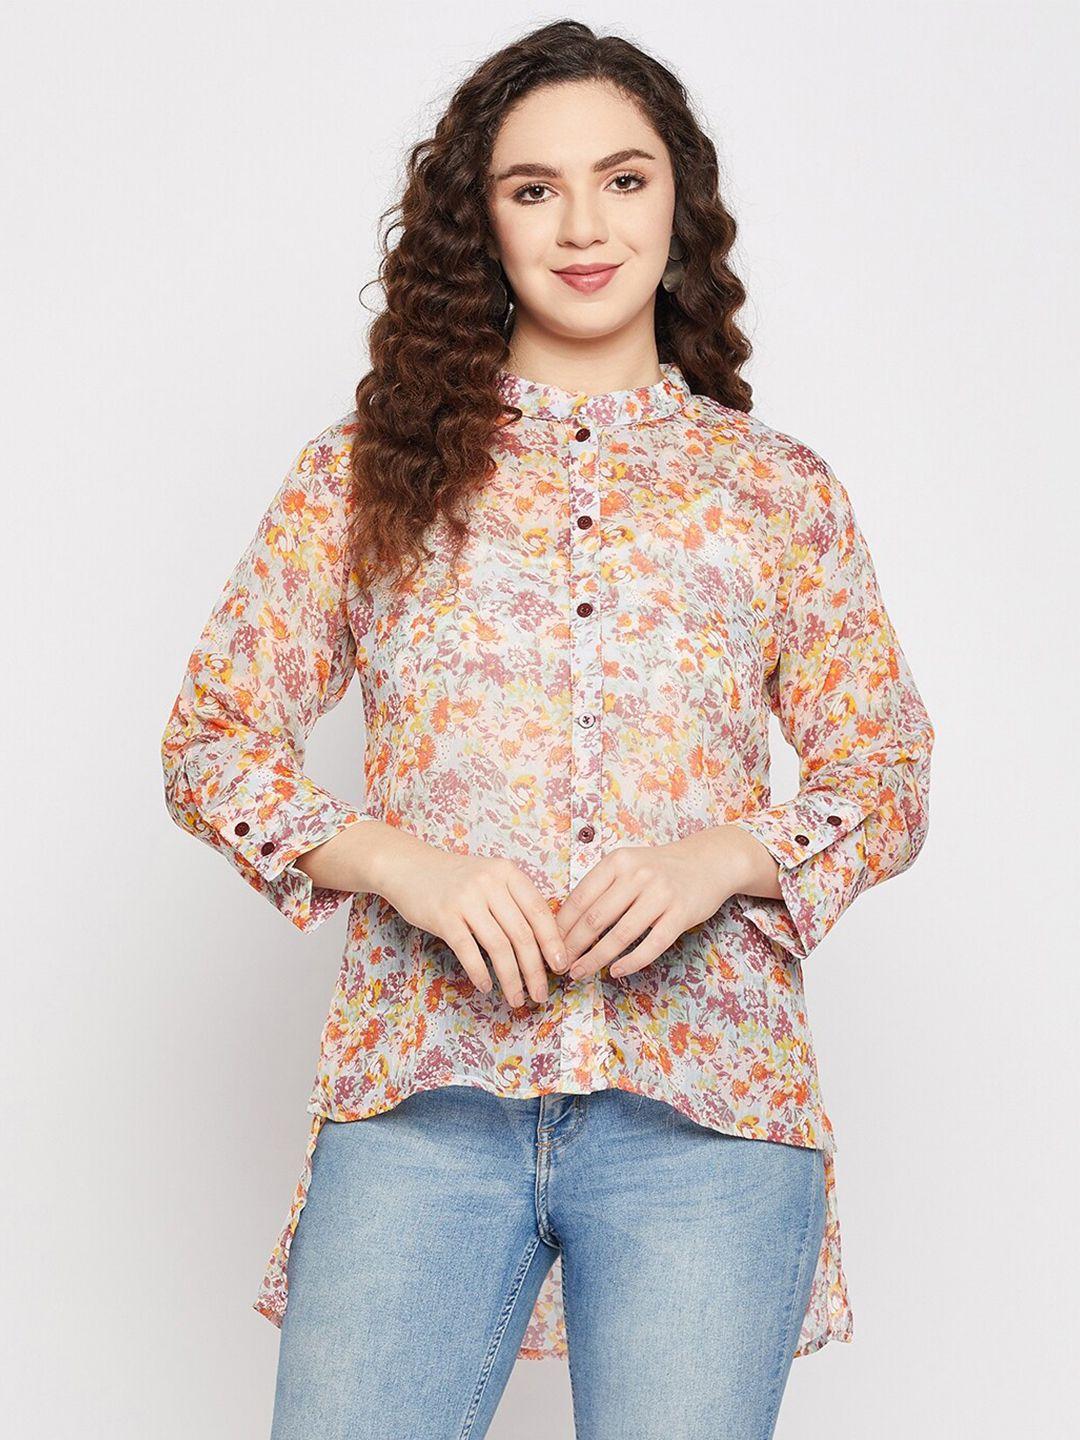 fashfun-floral-printed-mandarin-collar-high-low-top